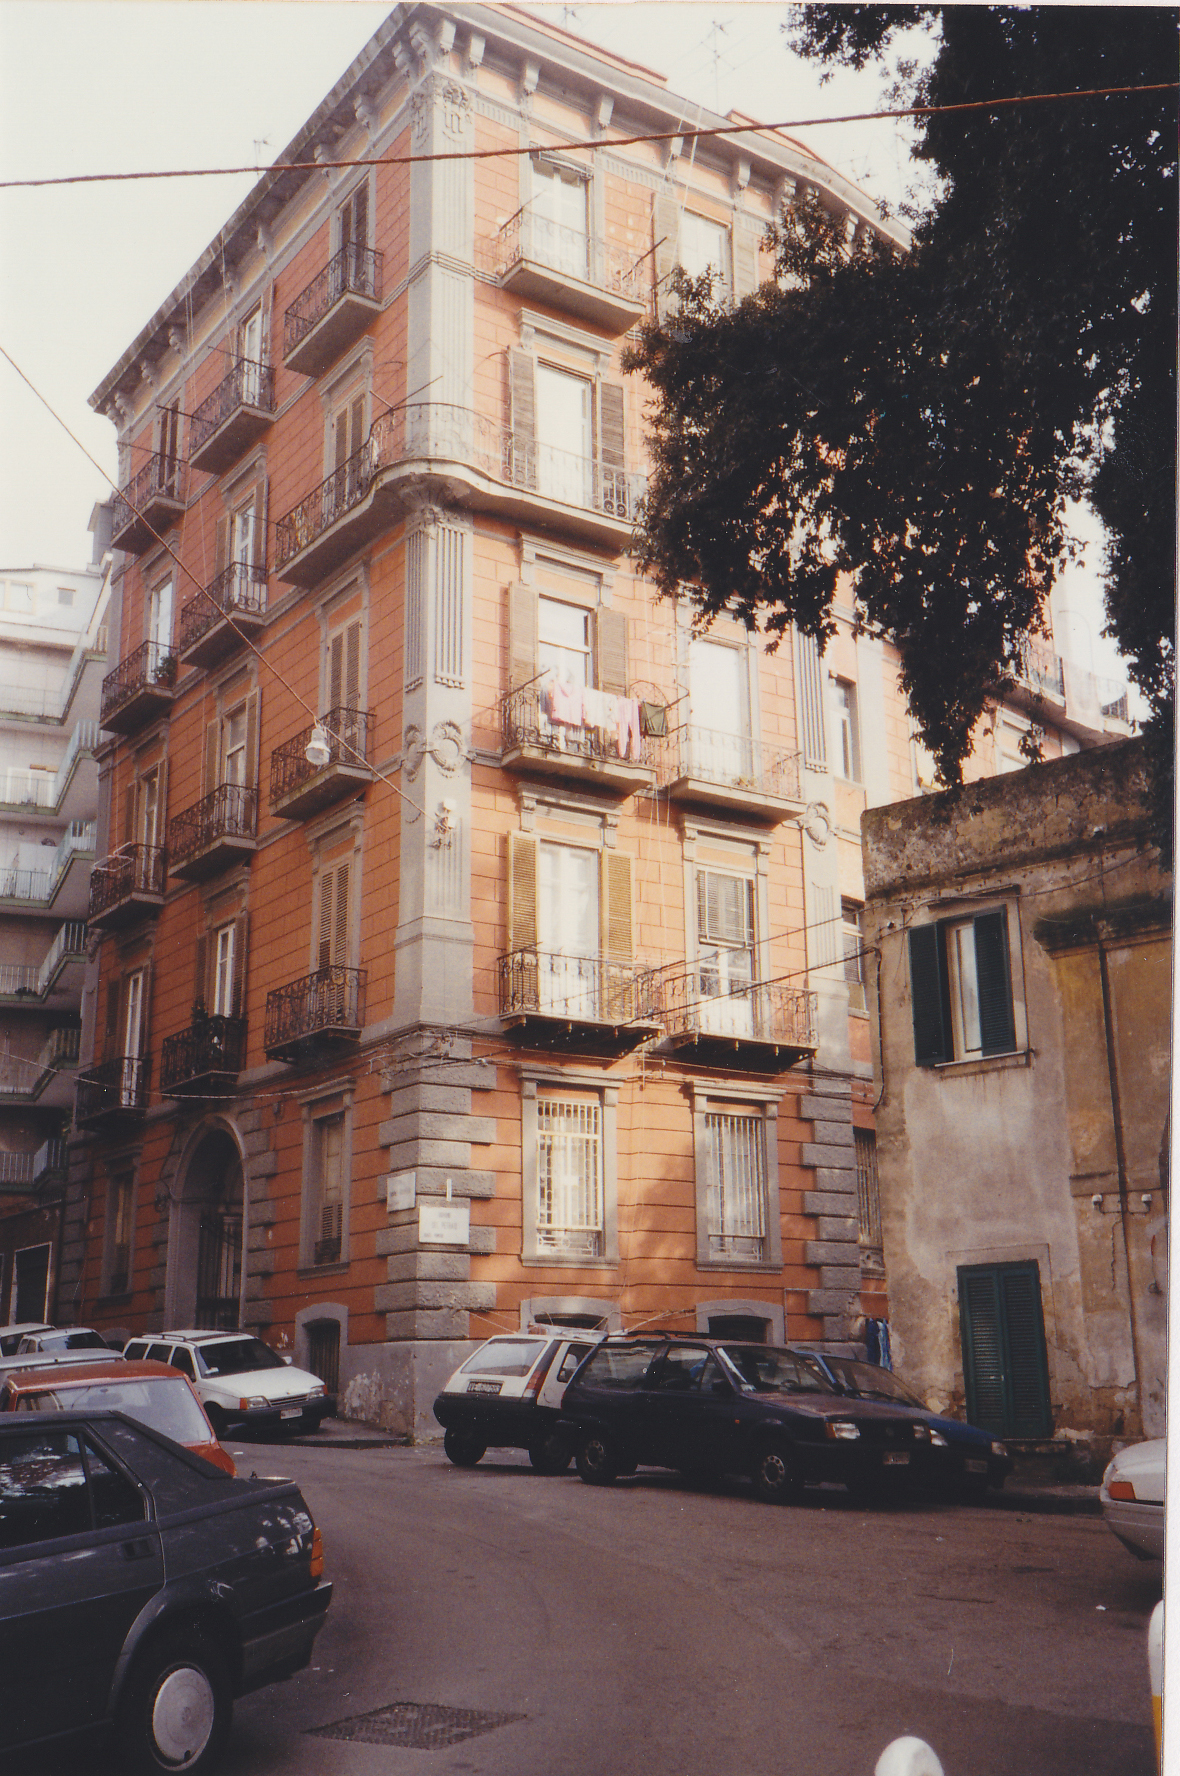 ignota - Via Caccavello, 12 (palazzo, residenziale) - Napoli (NA)  (XX)